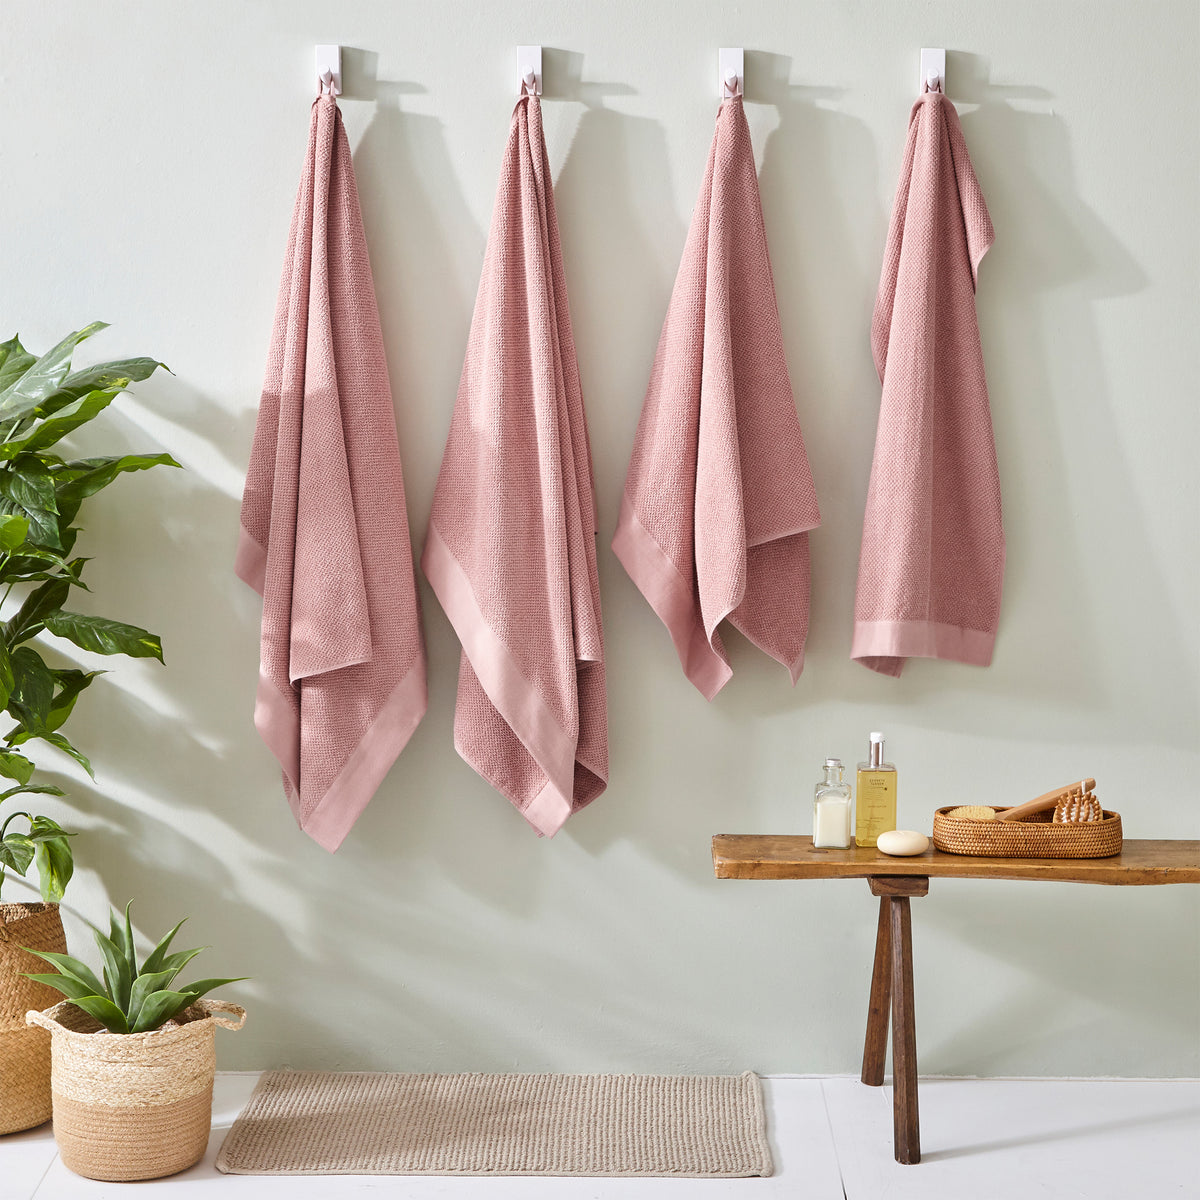 Textured 4pc Cotton Hand / Bath Sheet Towel Set